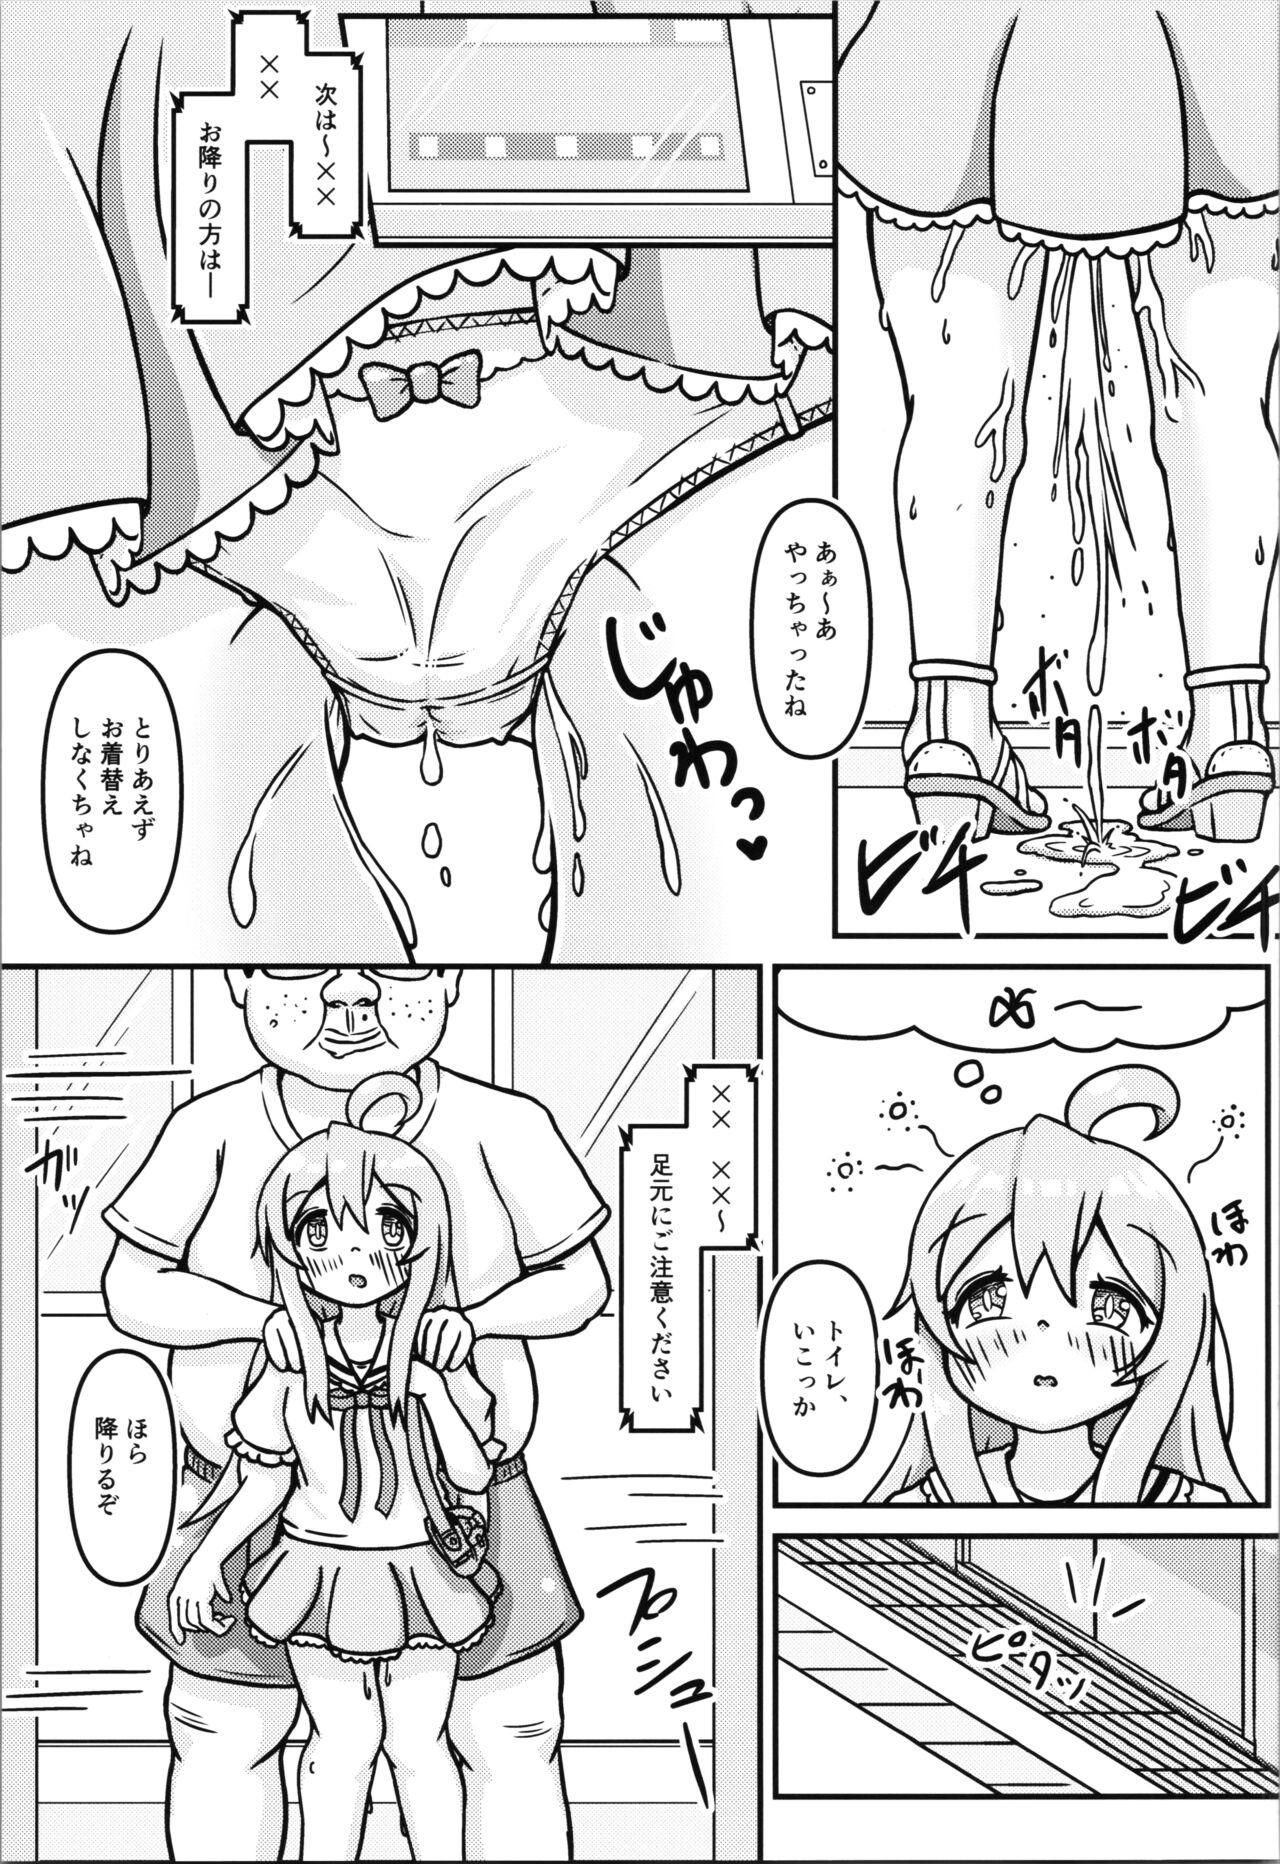 Mahiro-chan's bouncy ××× experience 12